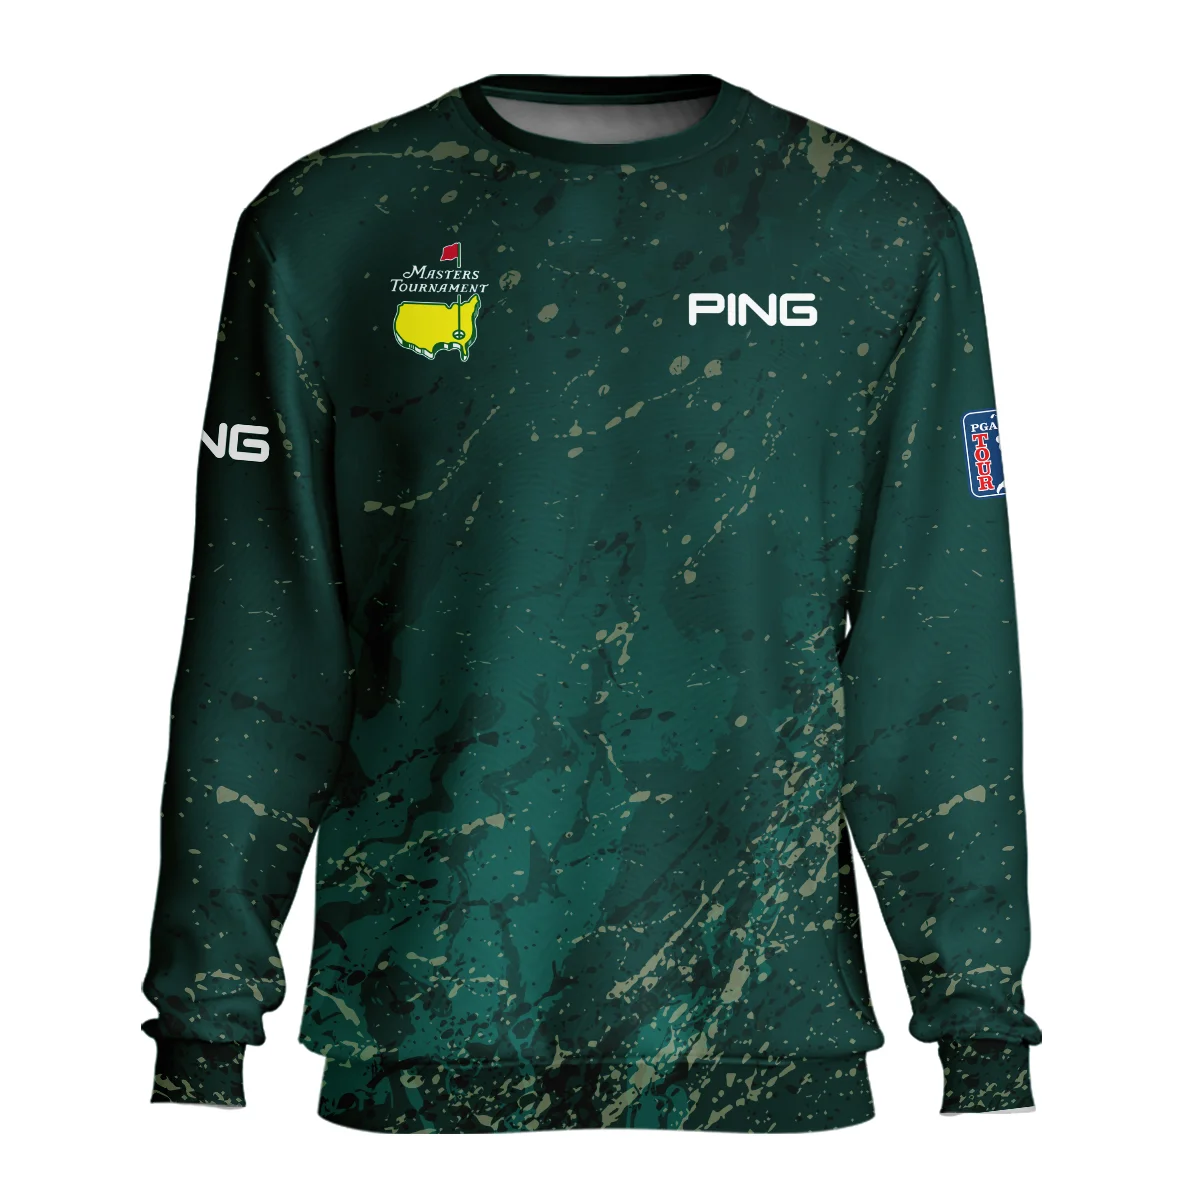 Old Cracked Texture With Gold Splash Paint Masters Tournament Ping Unisex Sweatshirt Style Classic Sweatshirt